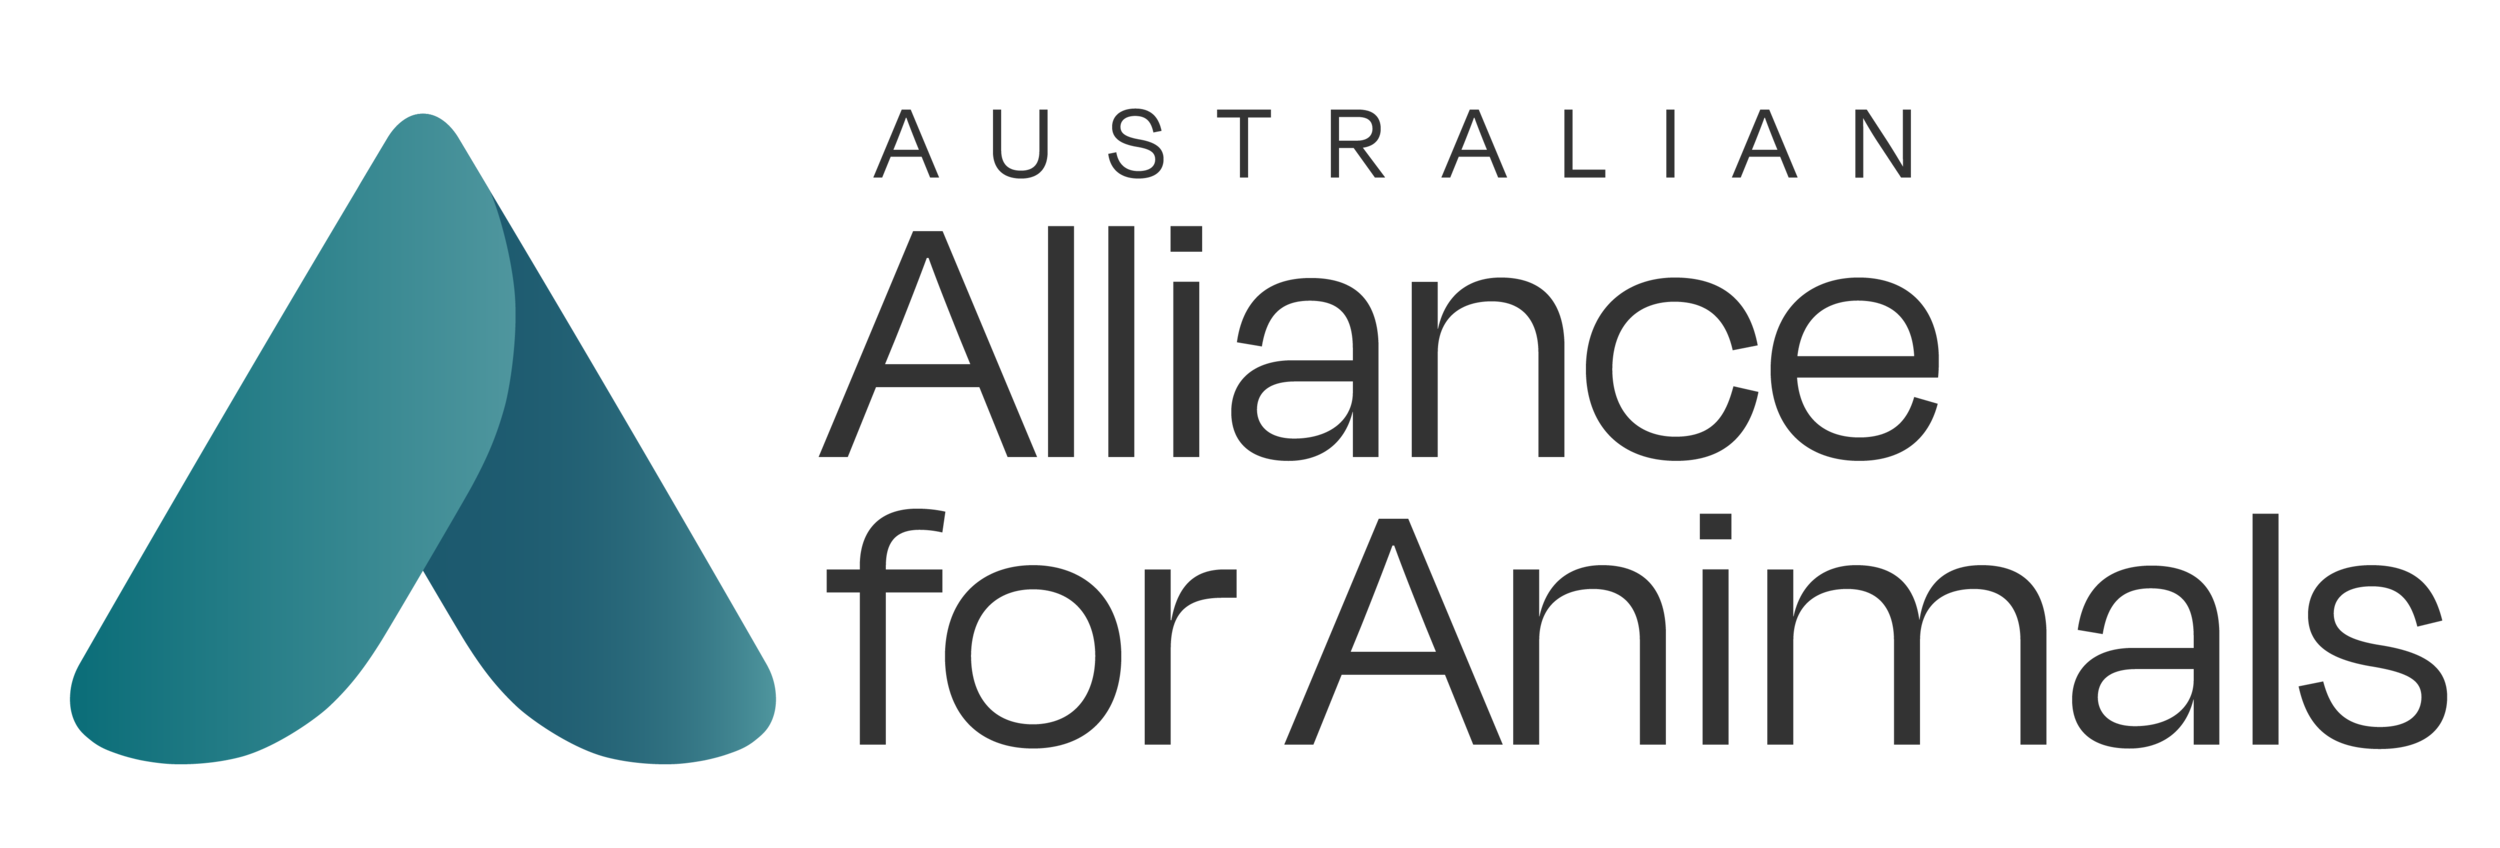 Australian Alliance for Animals